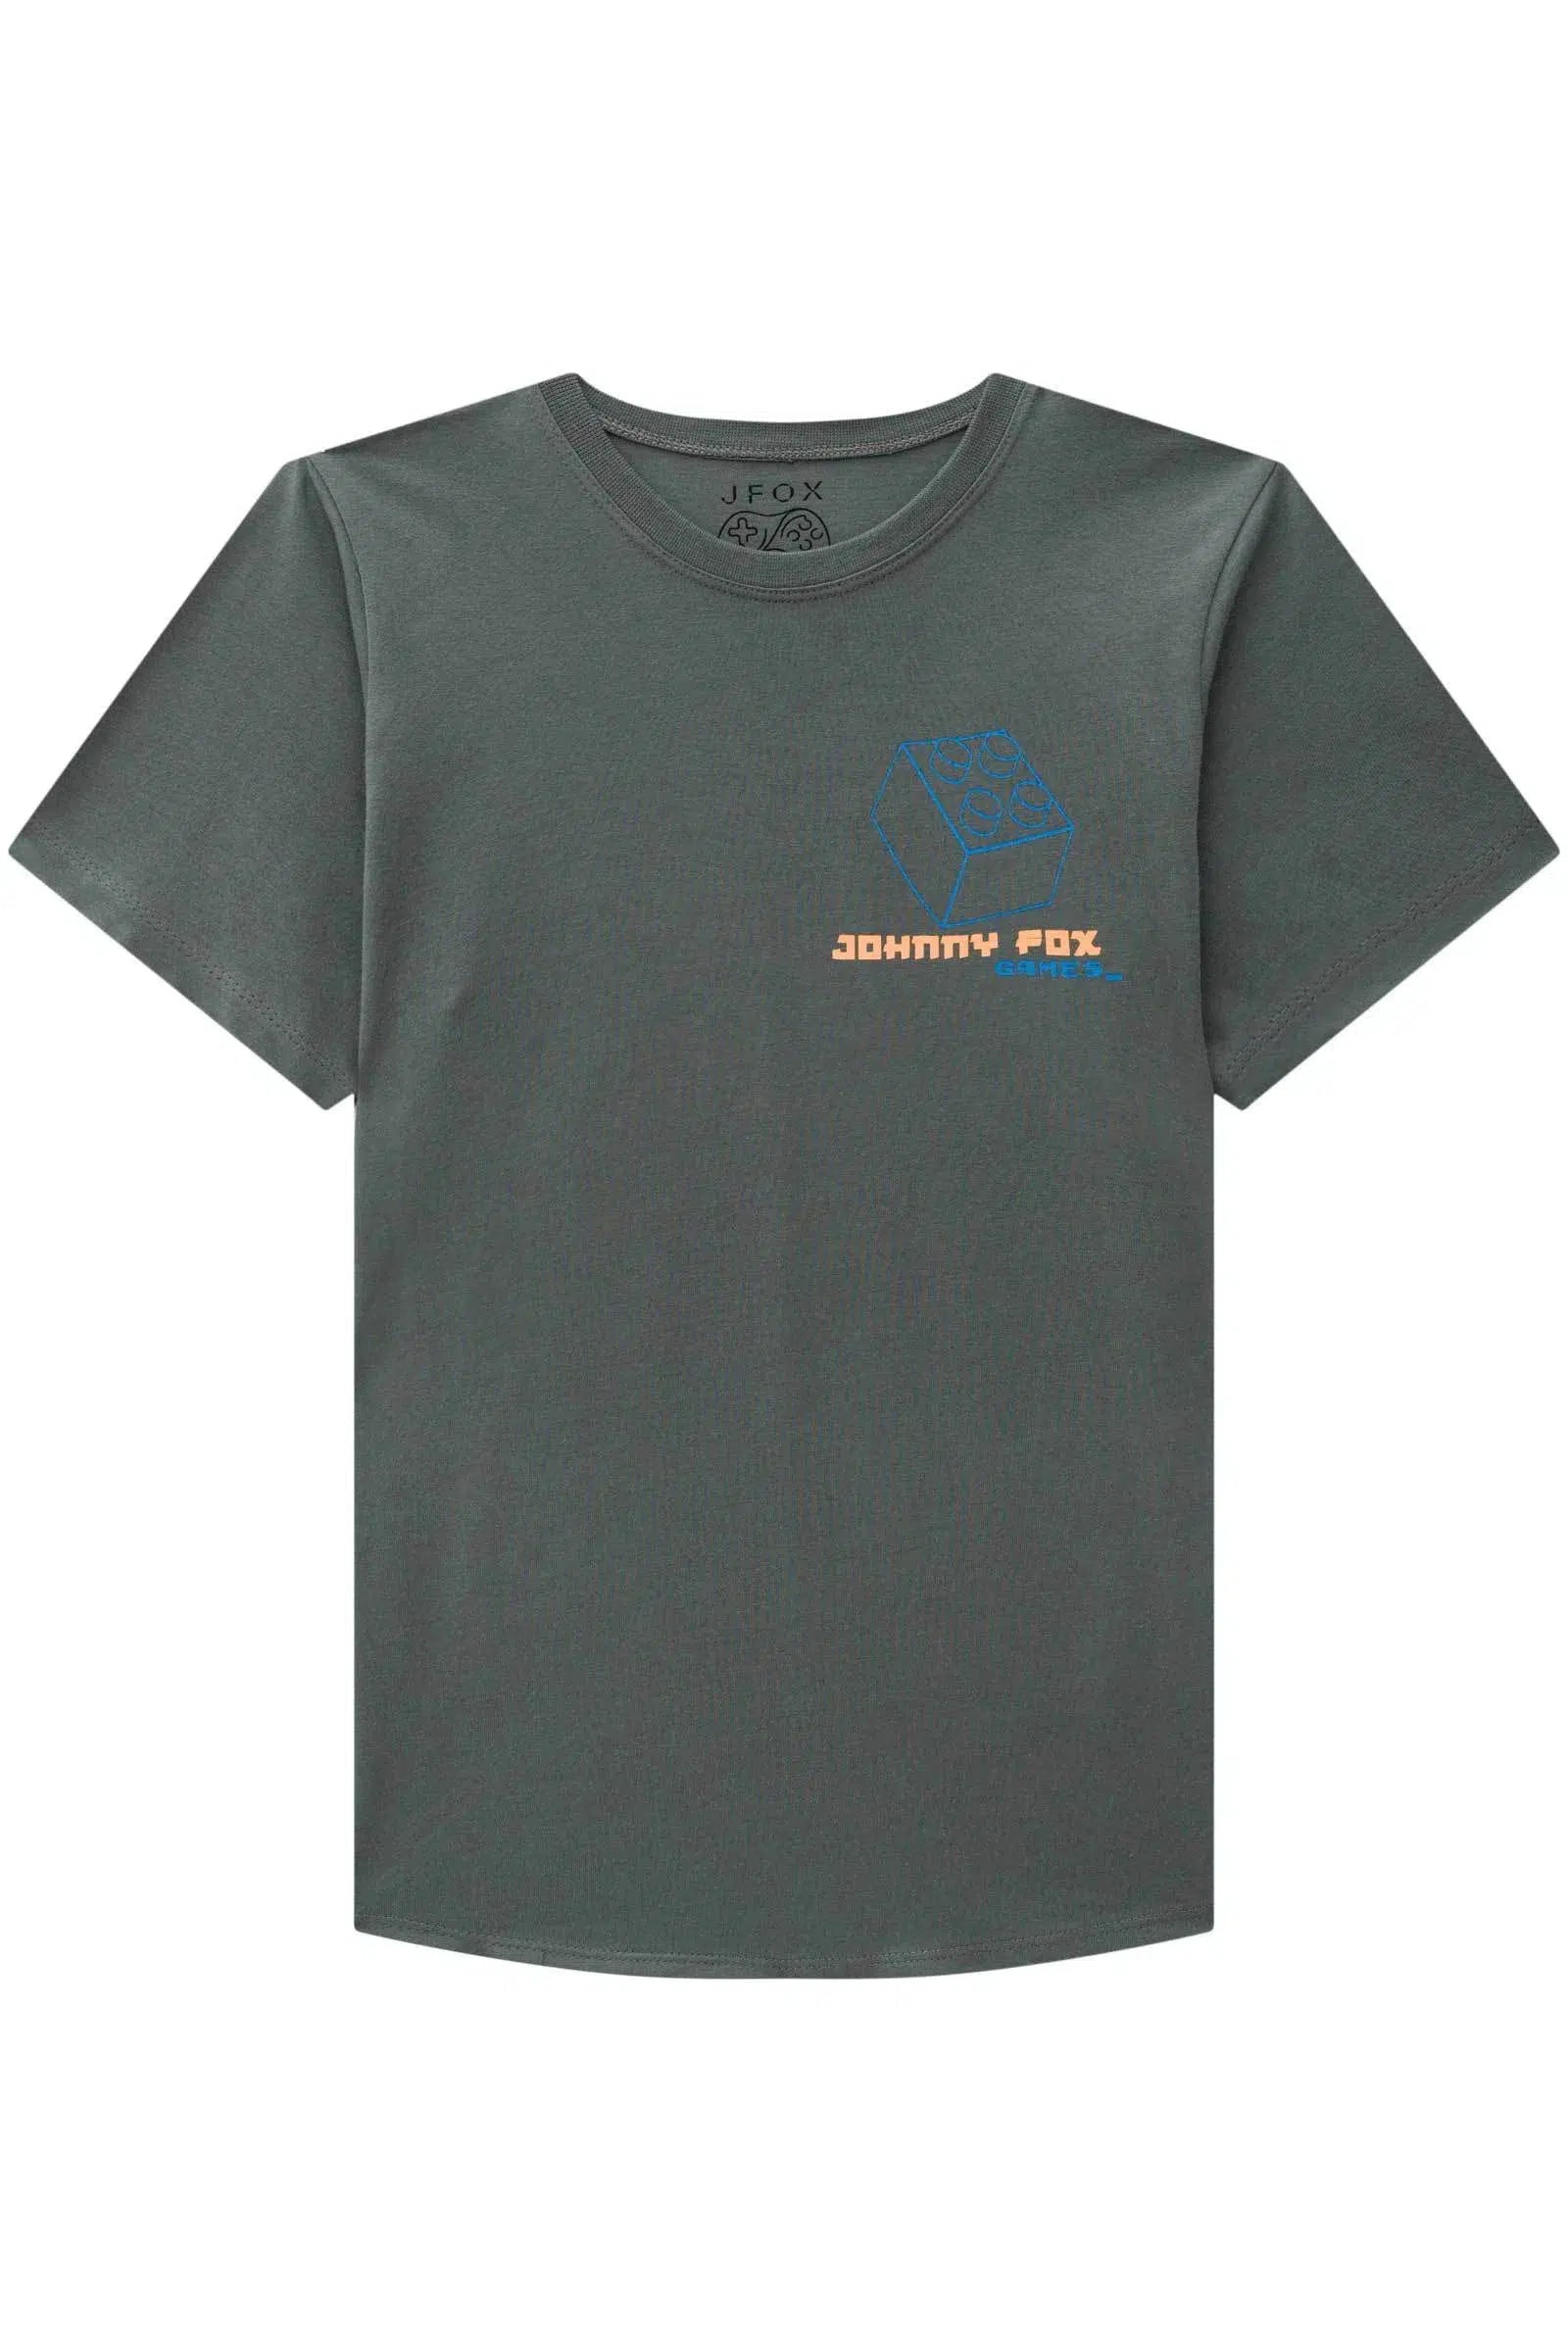 Camiseta em Meia Malha 72925 Johnny Fox